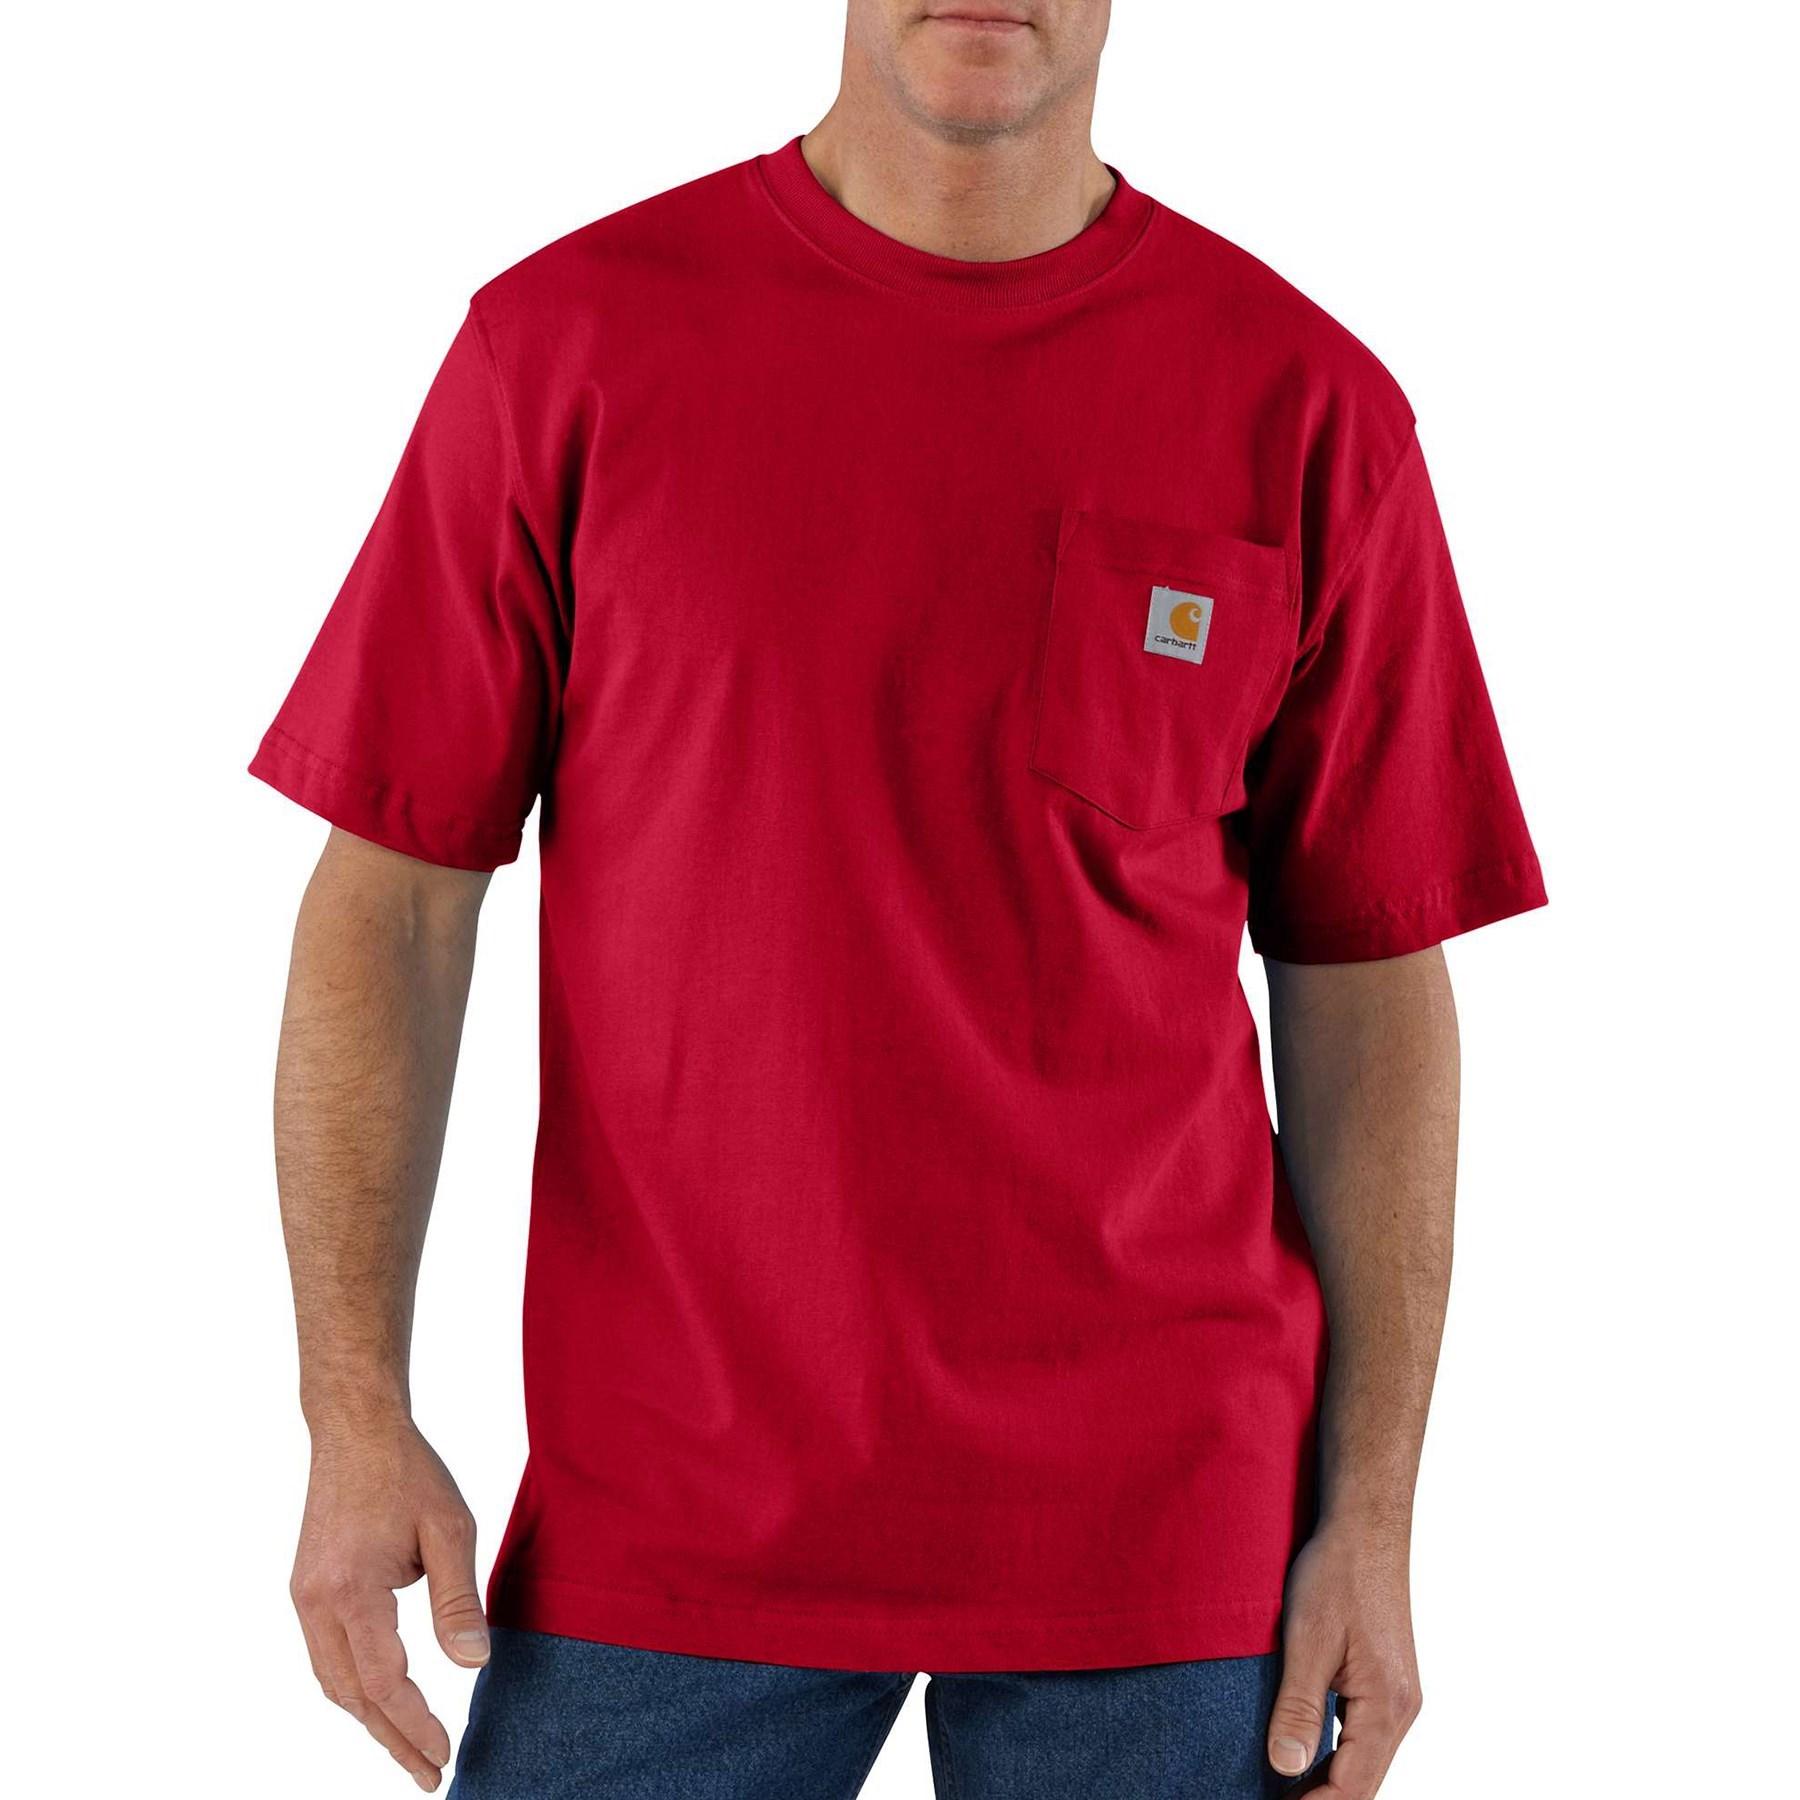 Carhartt Cotton K87 Workwear Pocket T-shirt in Red for Men - Lyst